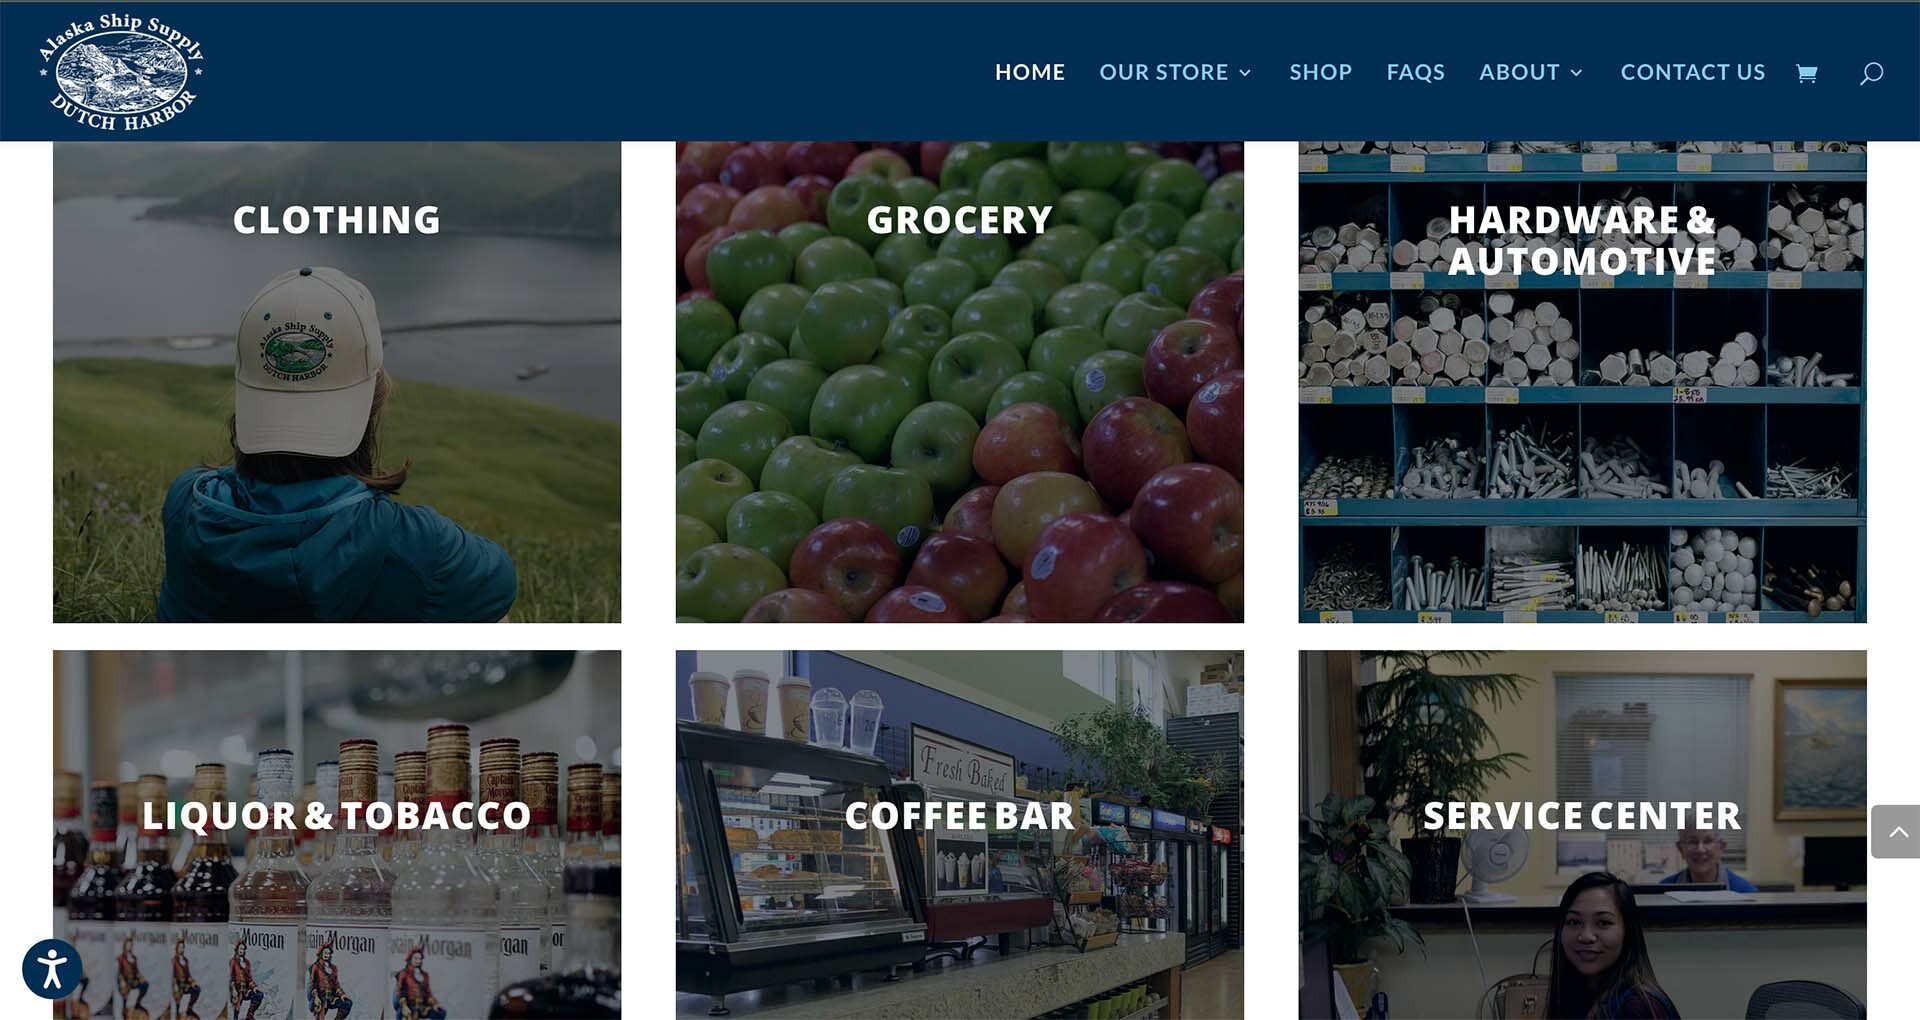 Alaska Ship Supply E-Commerce Web Design